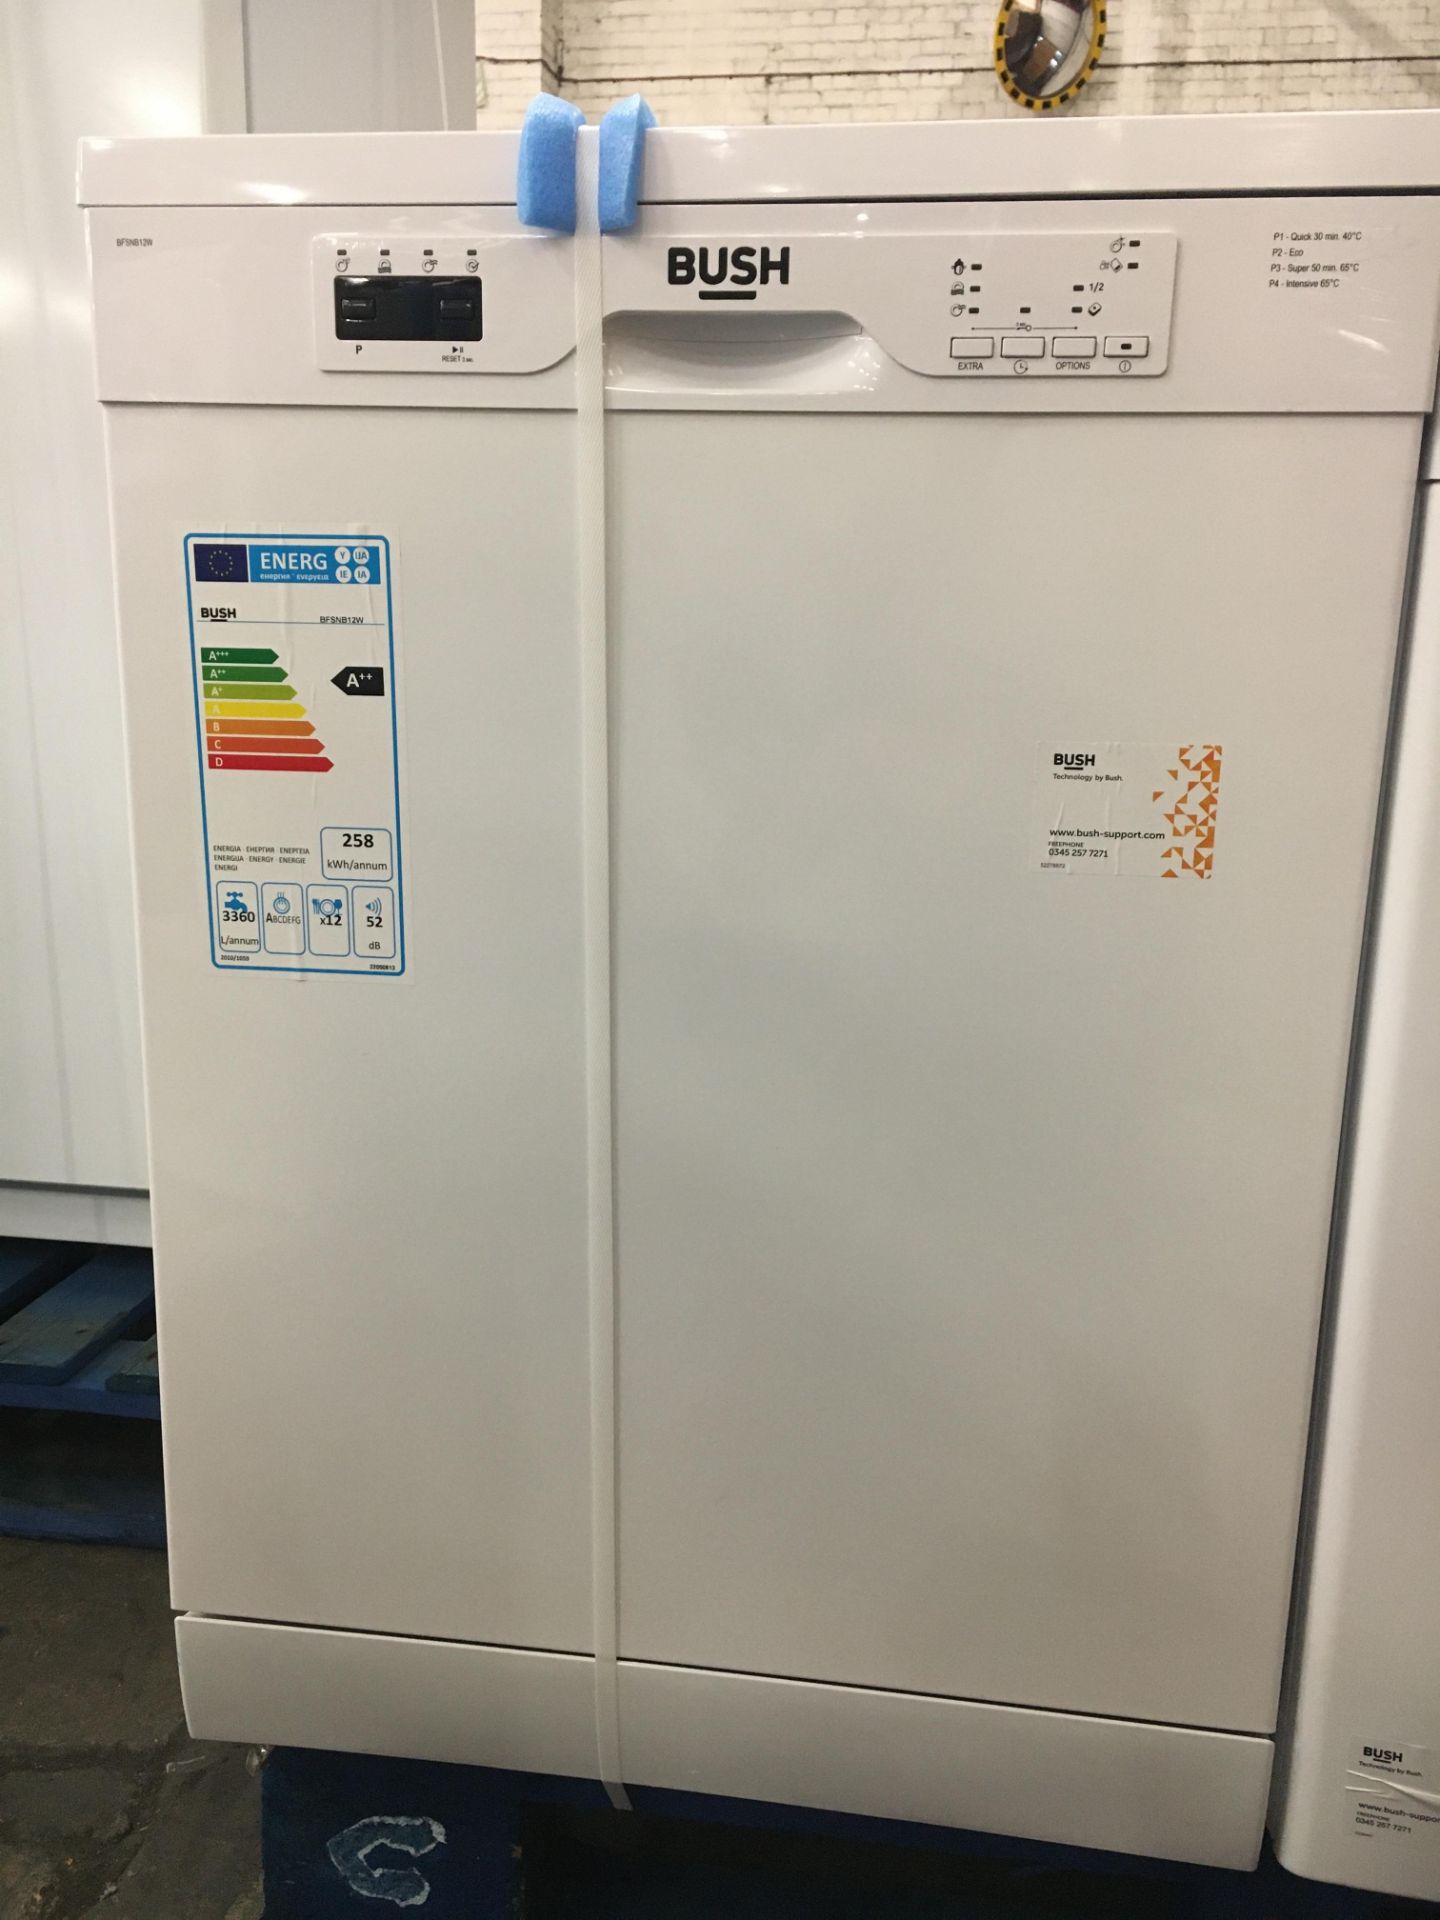 + VAT Grade A/B Bush BFSNB12W Full Size Dishwasher - A++ Energy Rating - ISP £189.99 (Argos)